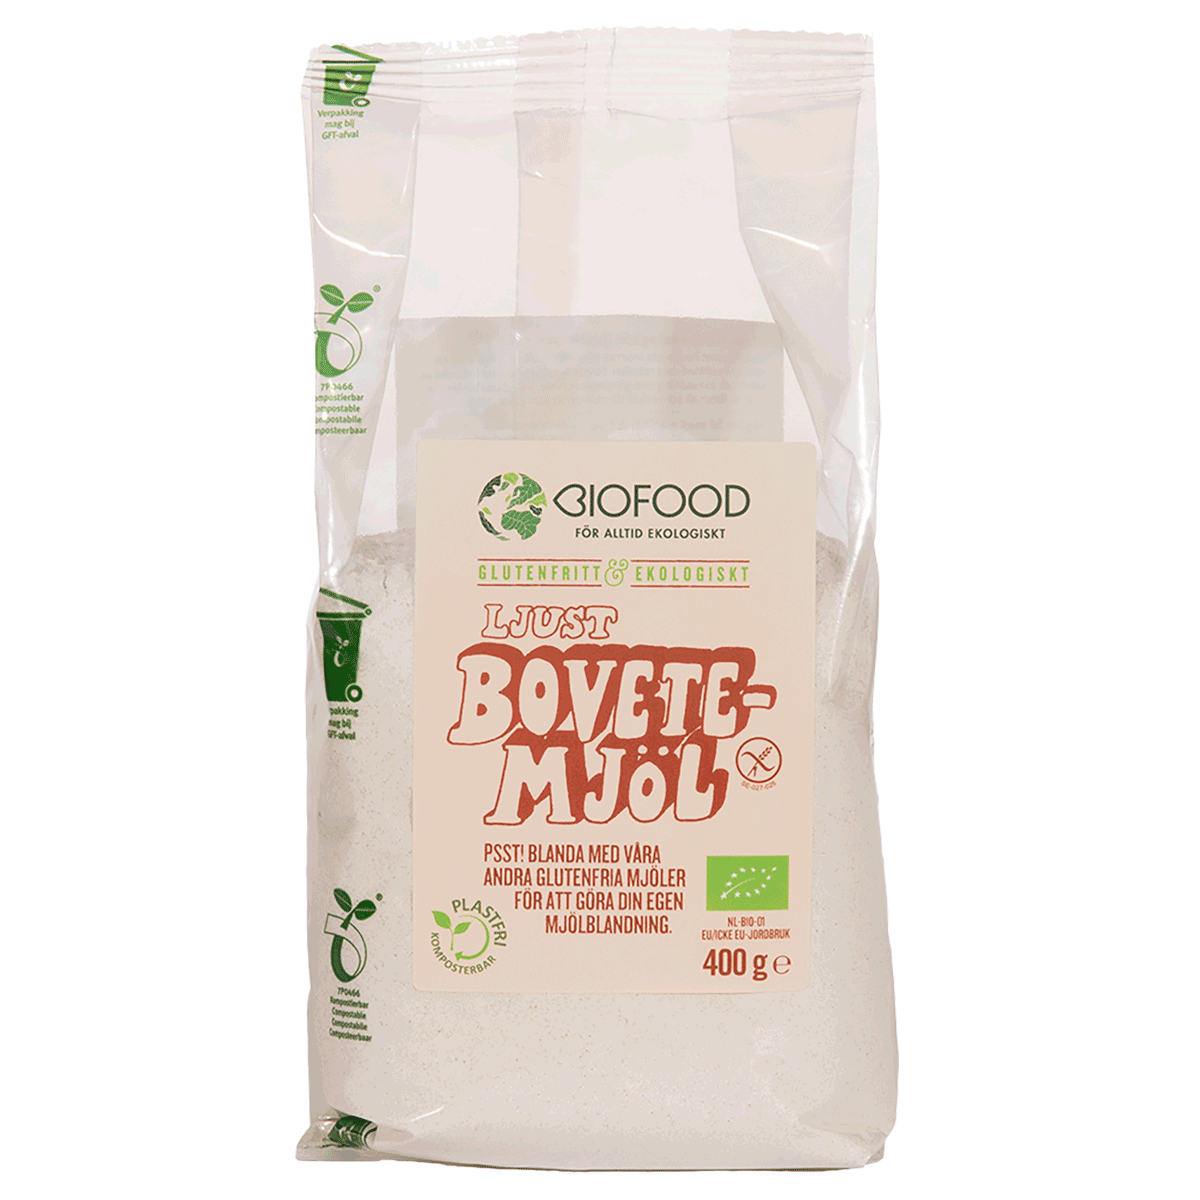 Buckwheat flour from Biofood